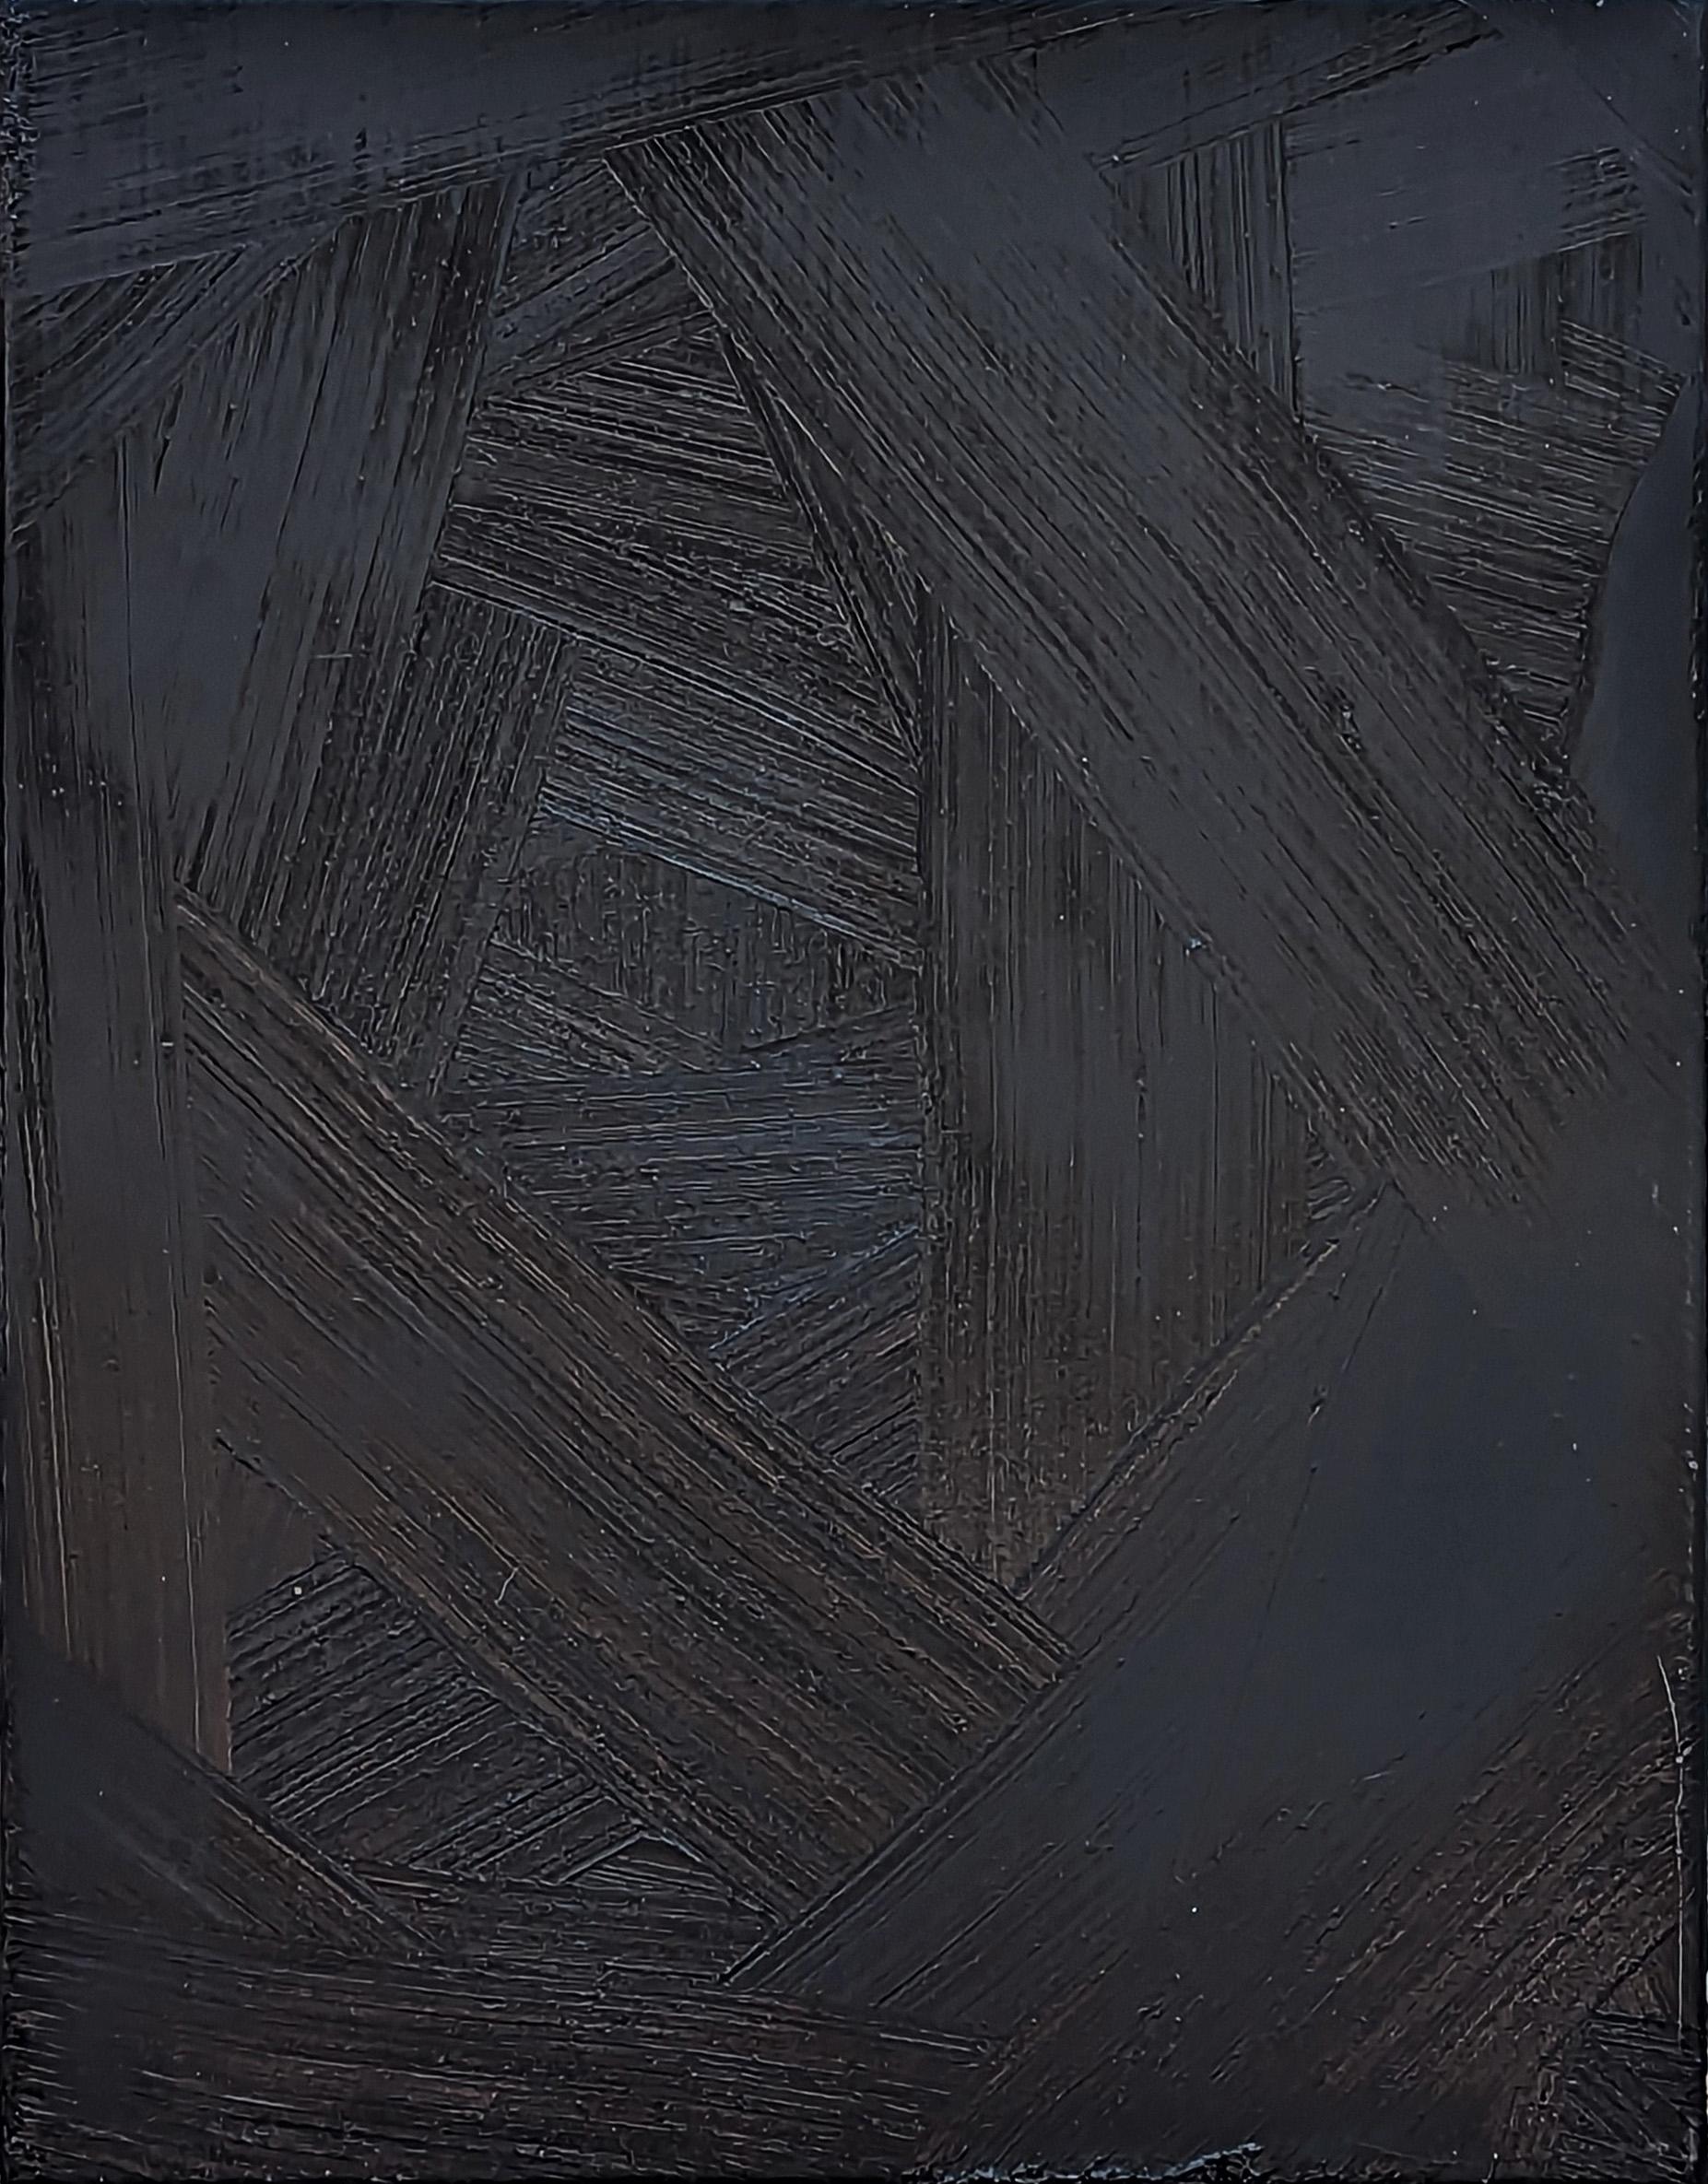 Void (I'm Lovin' It) Contemporary Black Textured Impasto Abstract Painting 